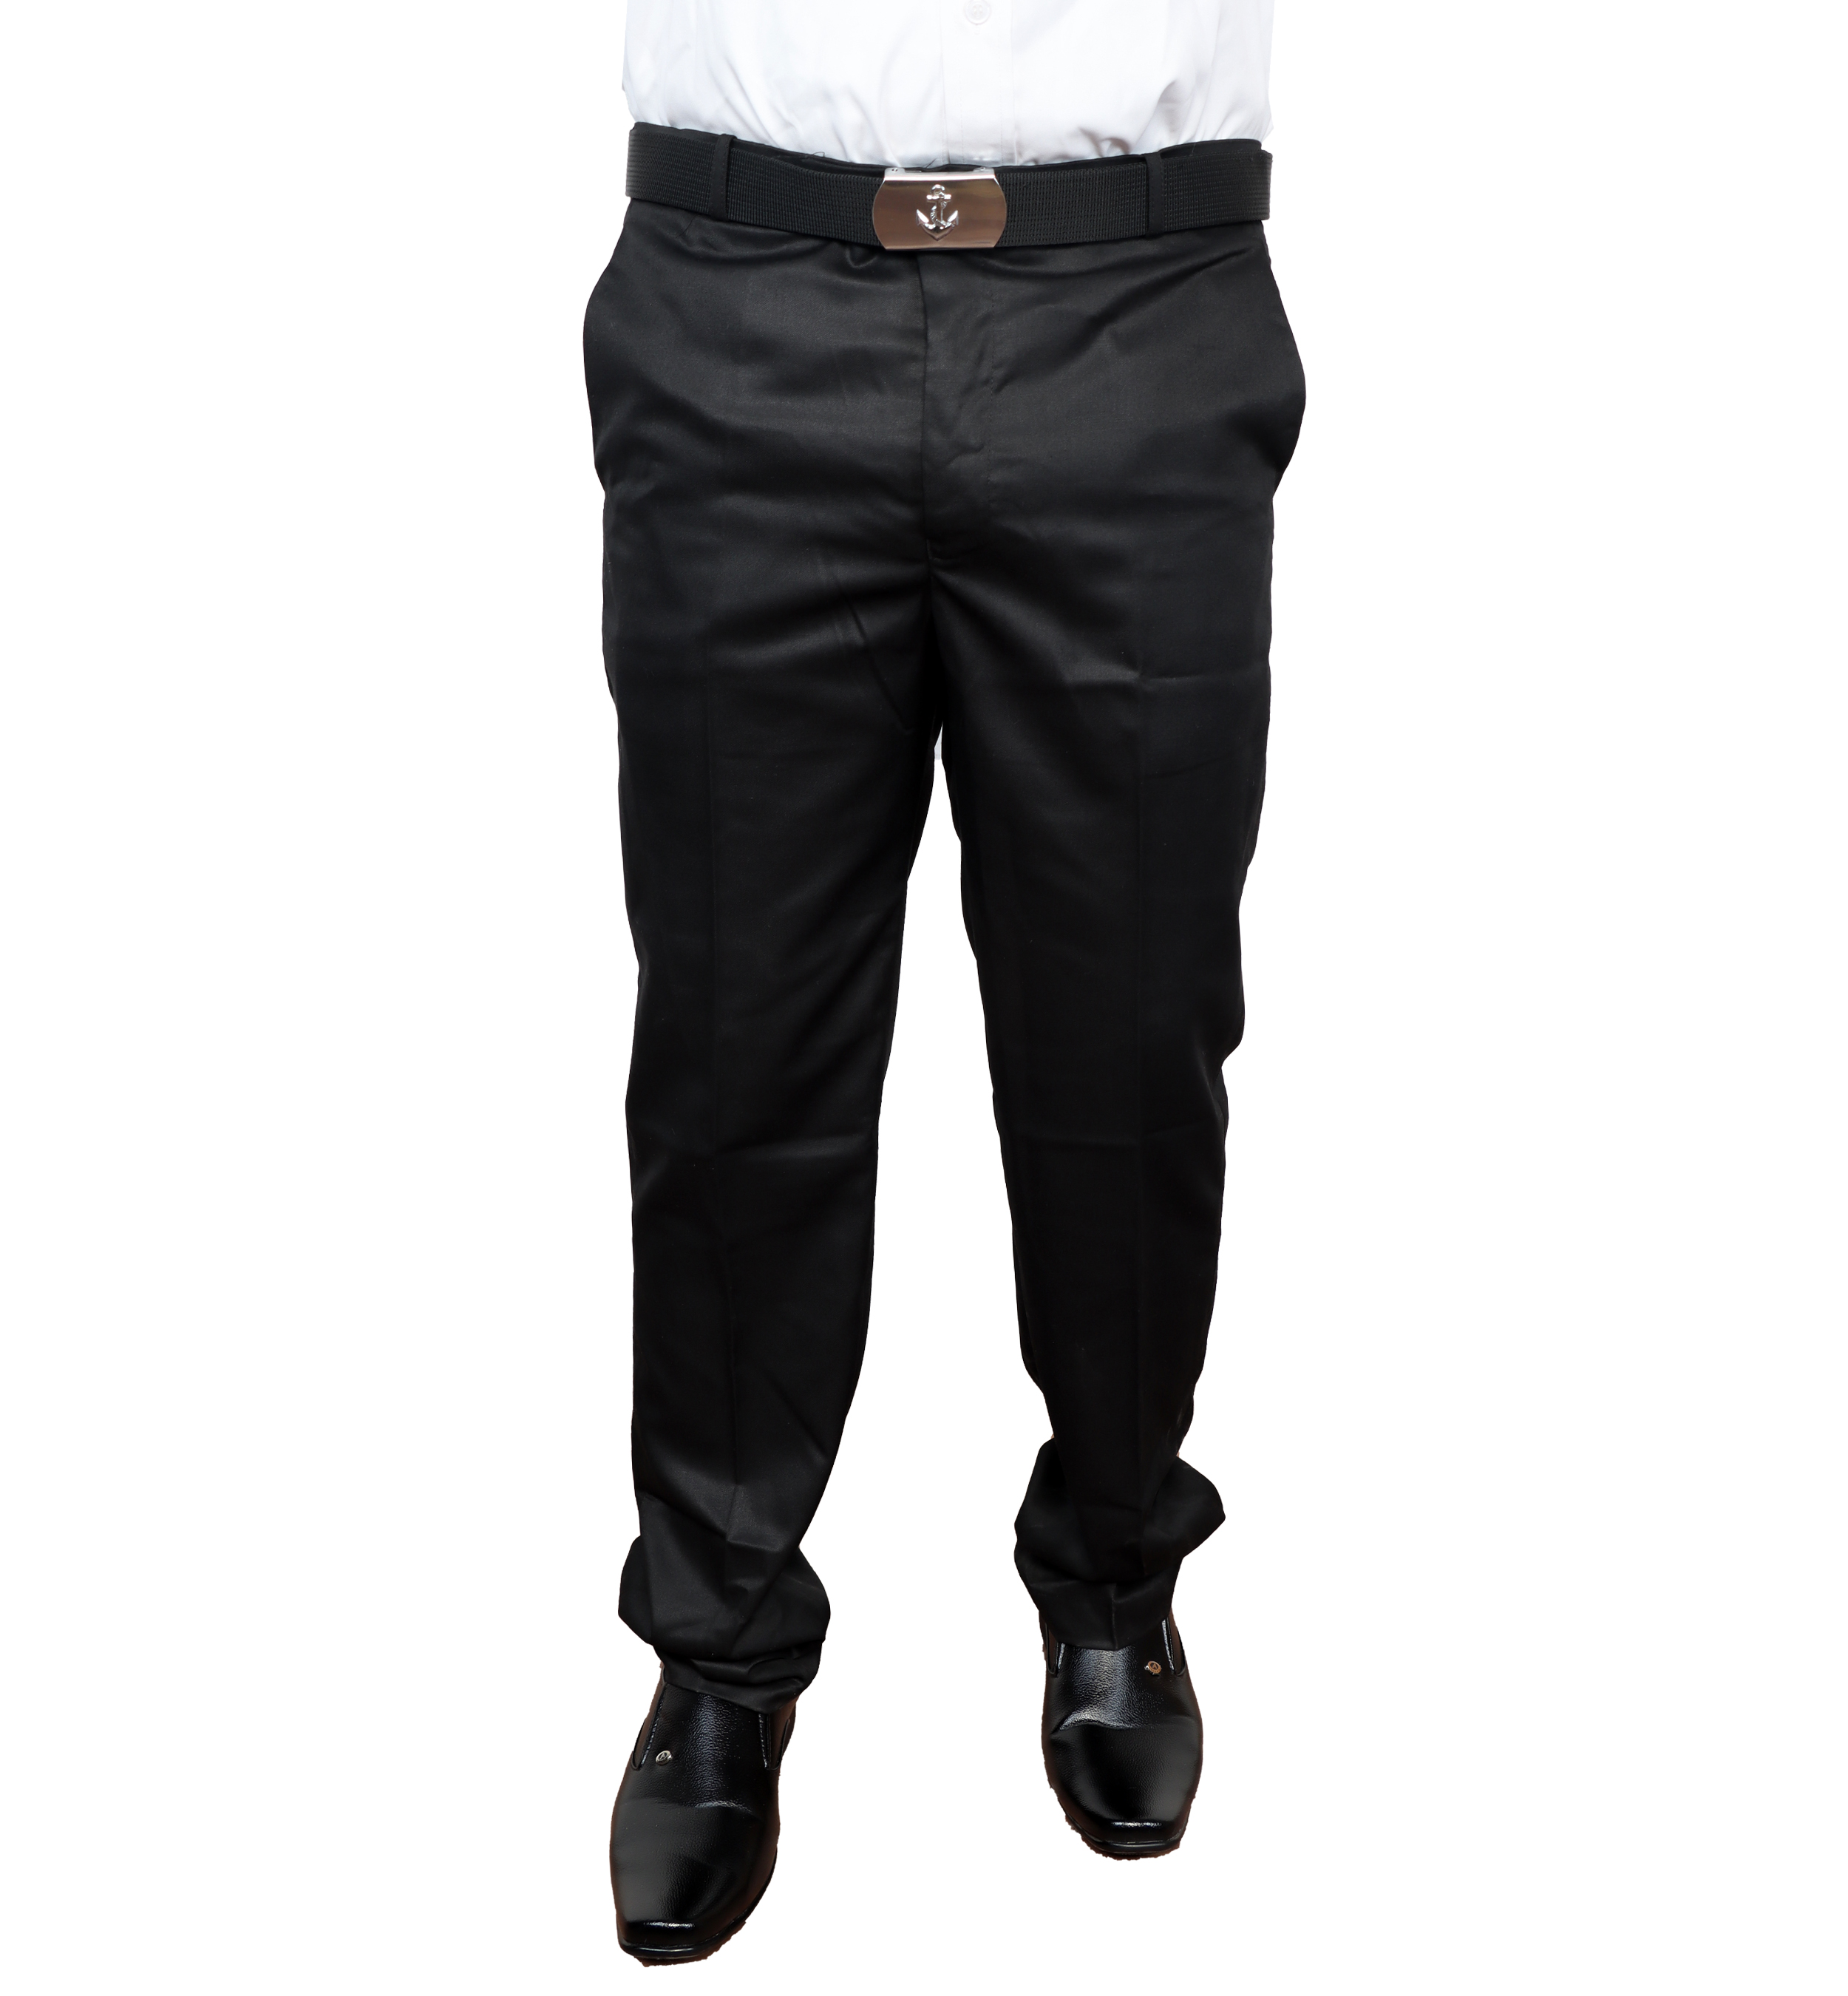 Merchant Navy Black Trouser / Pant